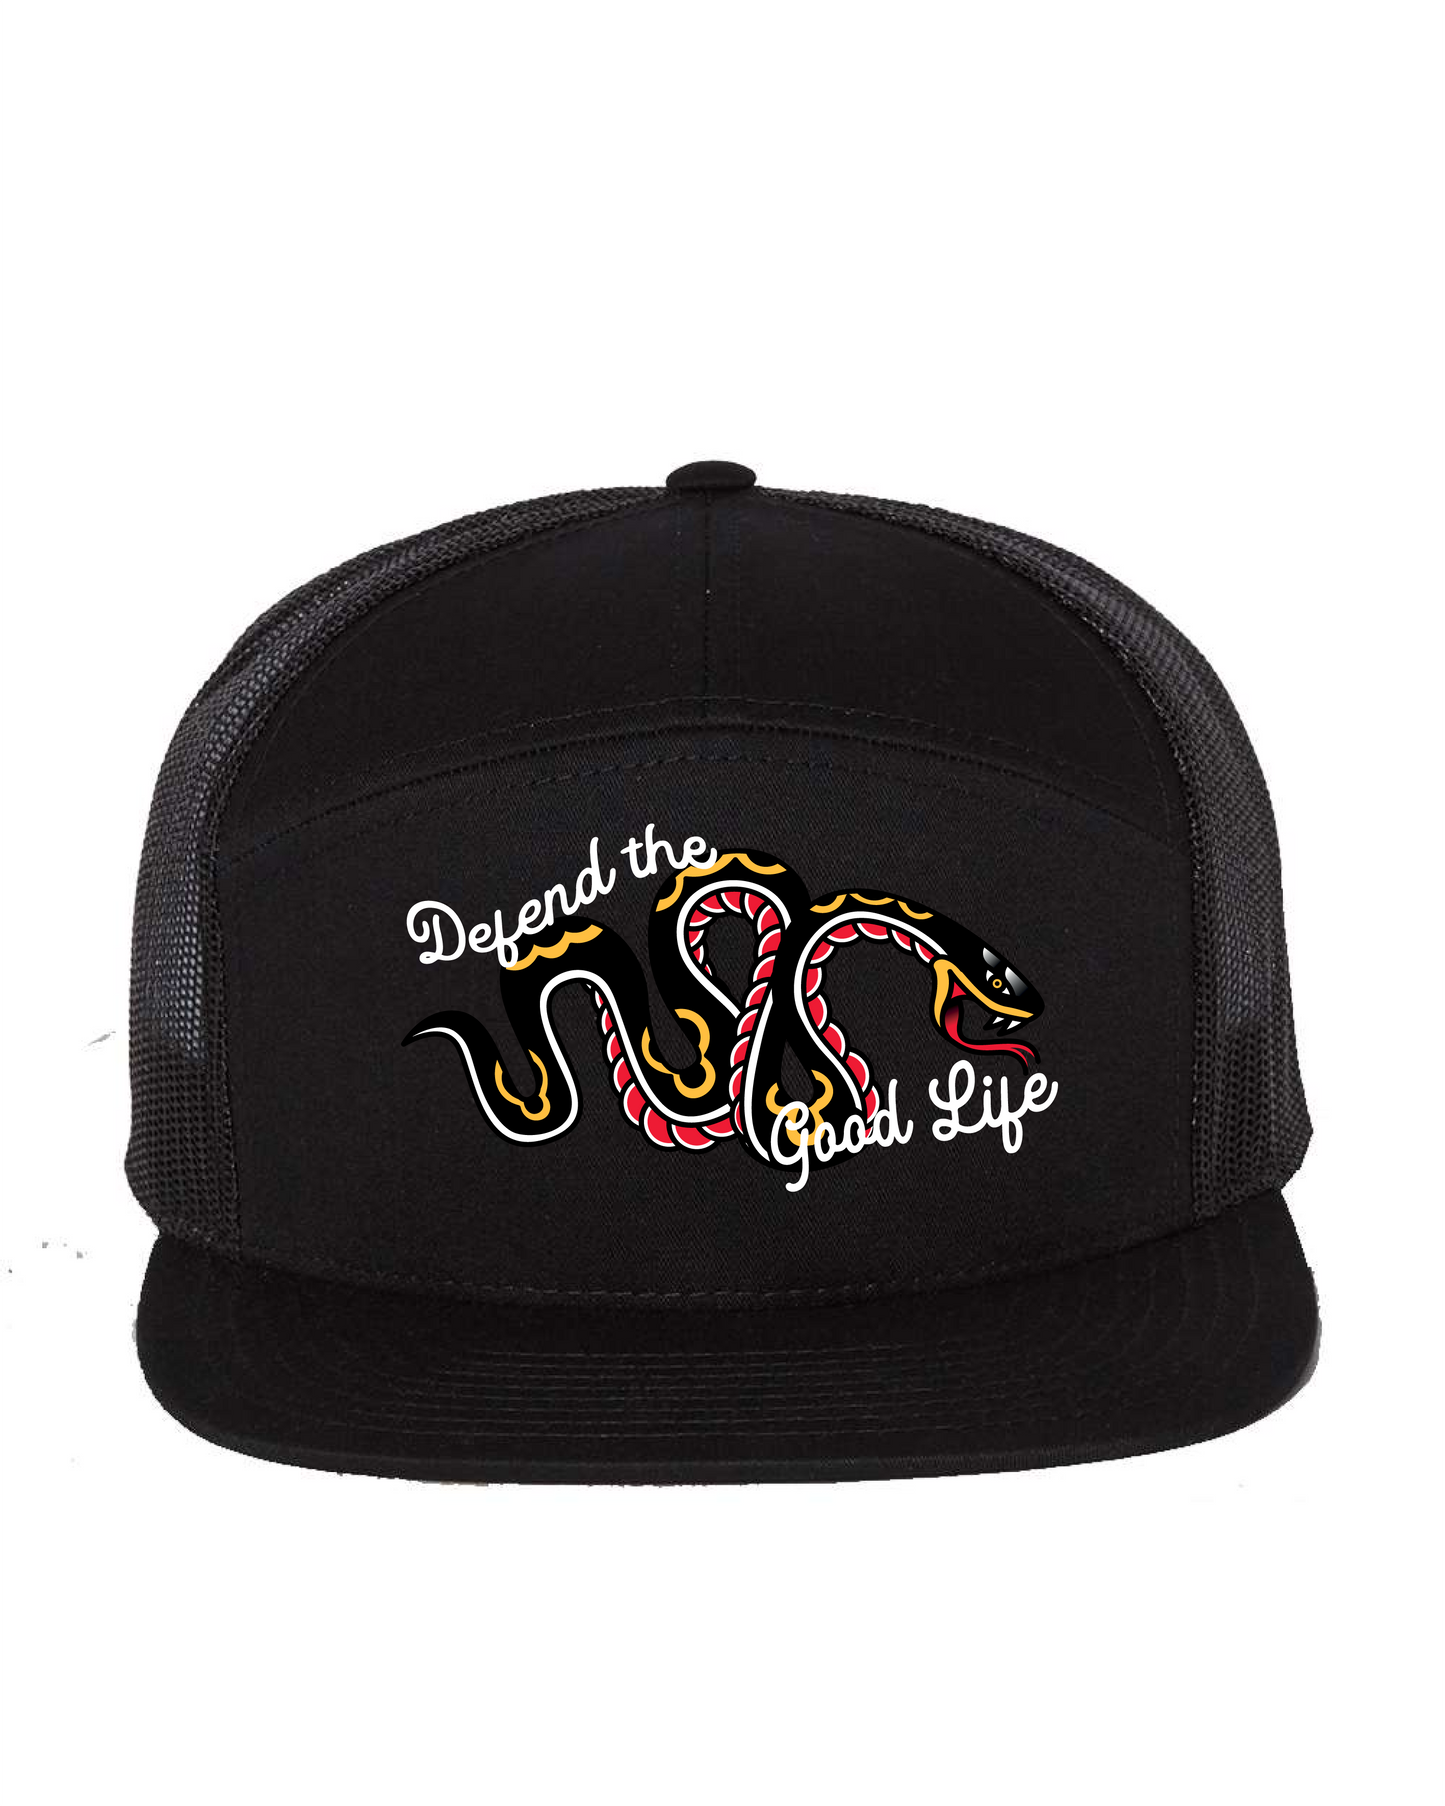 Defend the Good Life Snake - Trucker Hat